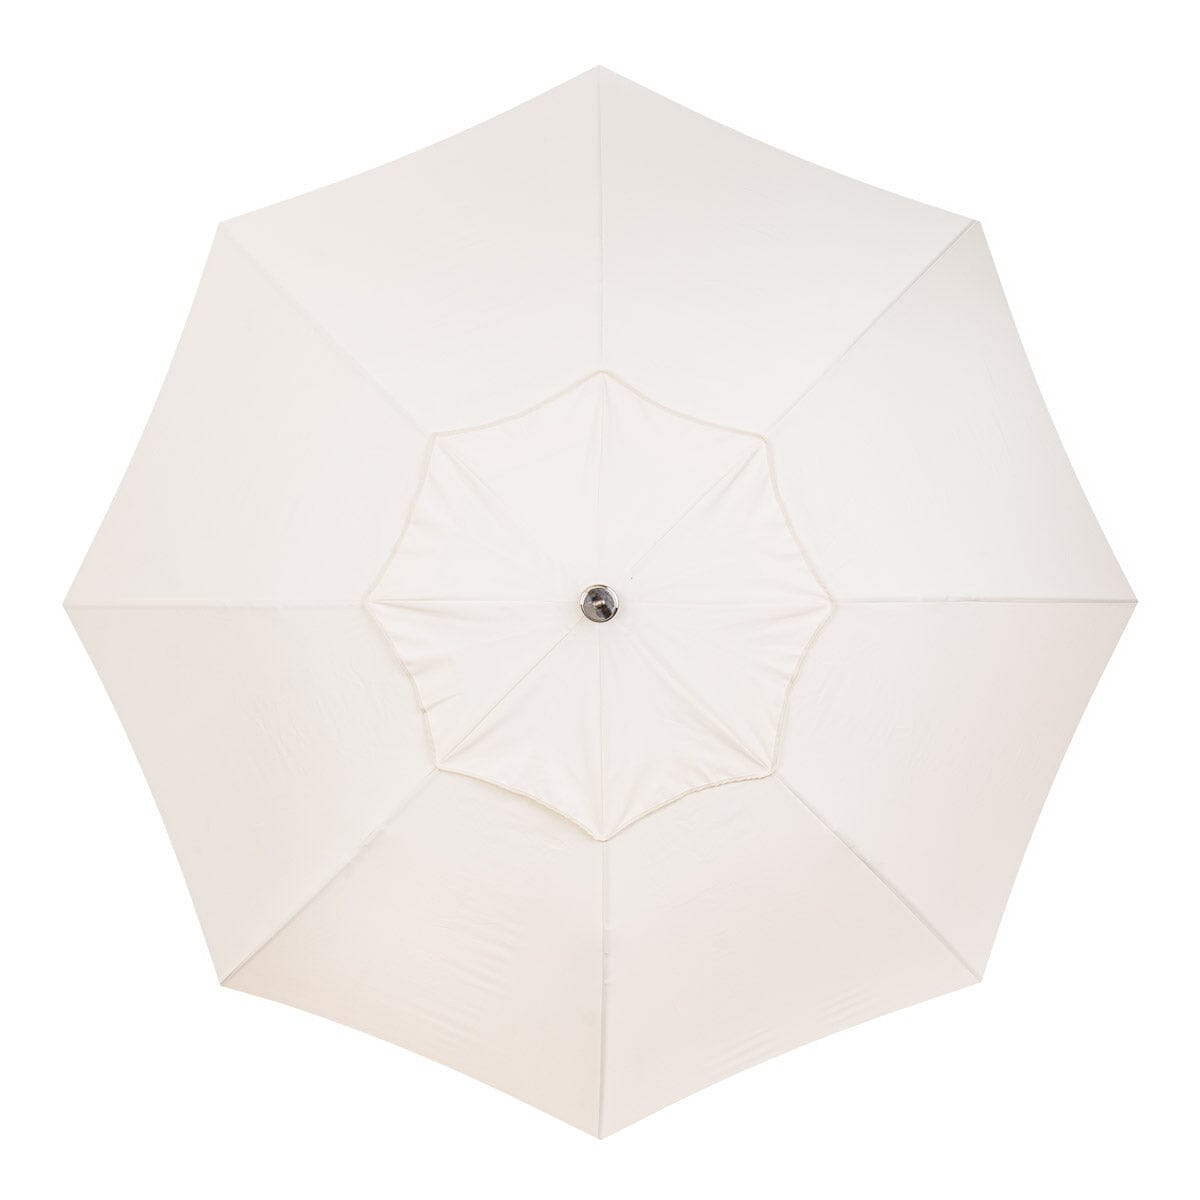 large white umbrella top down view on white background